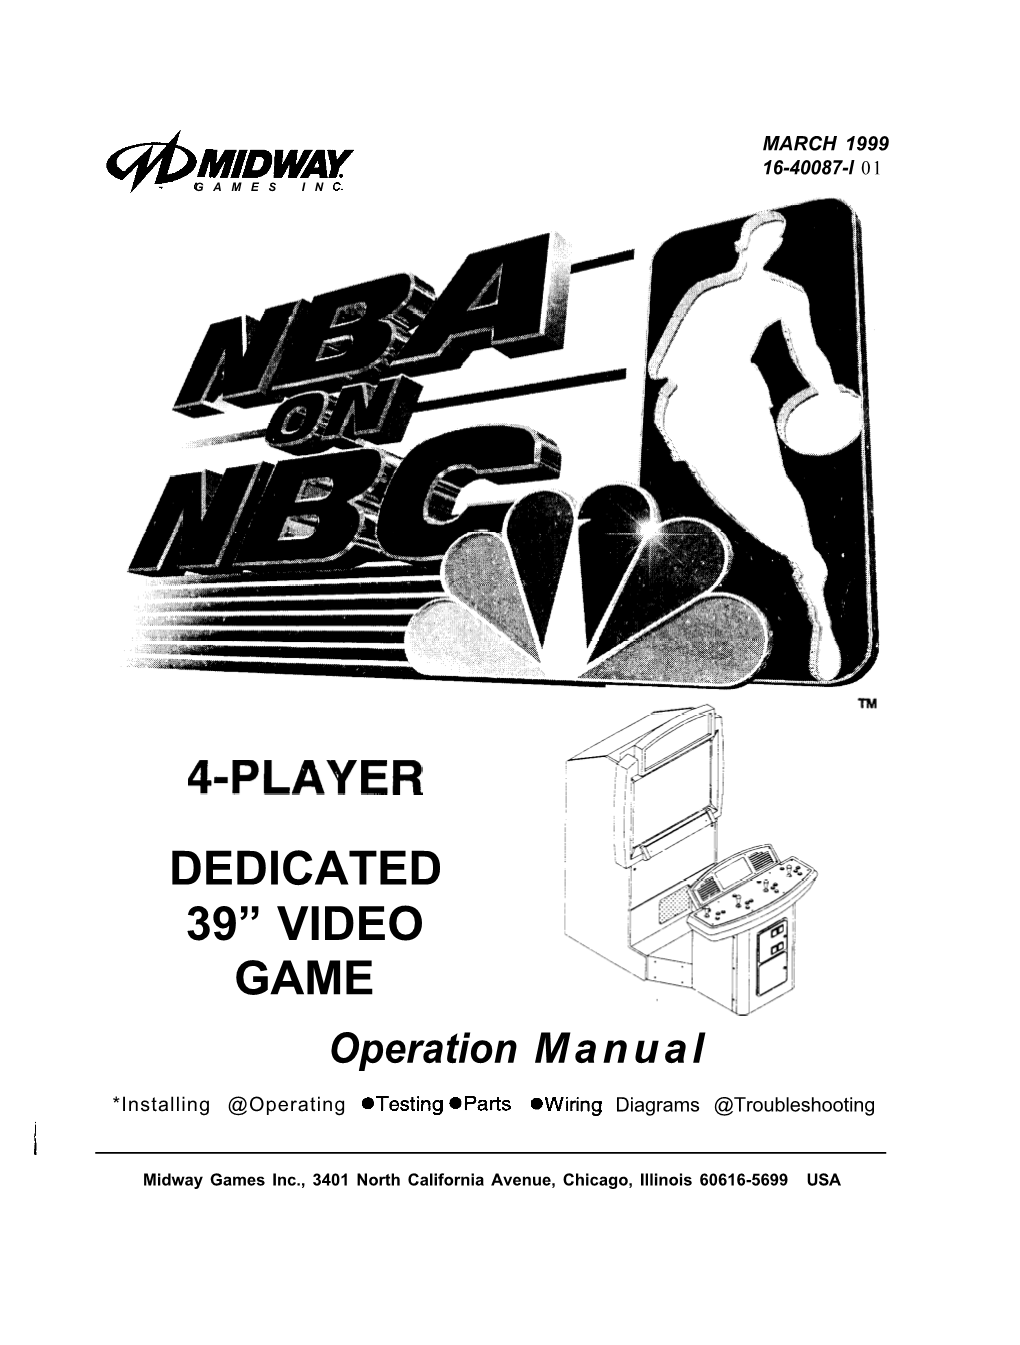 NBA on NBC 4 Player Dedicated 39 Video Game Manual